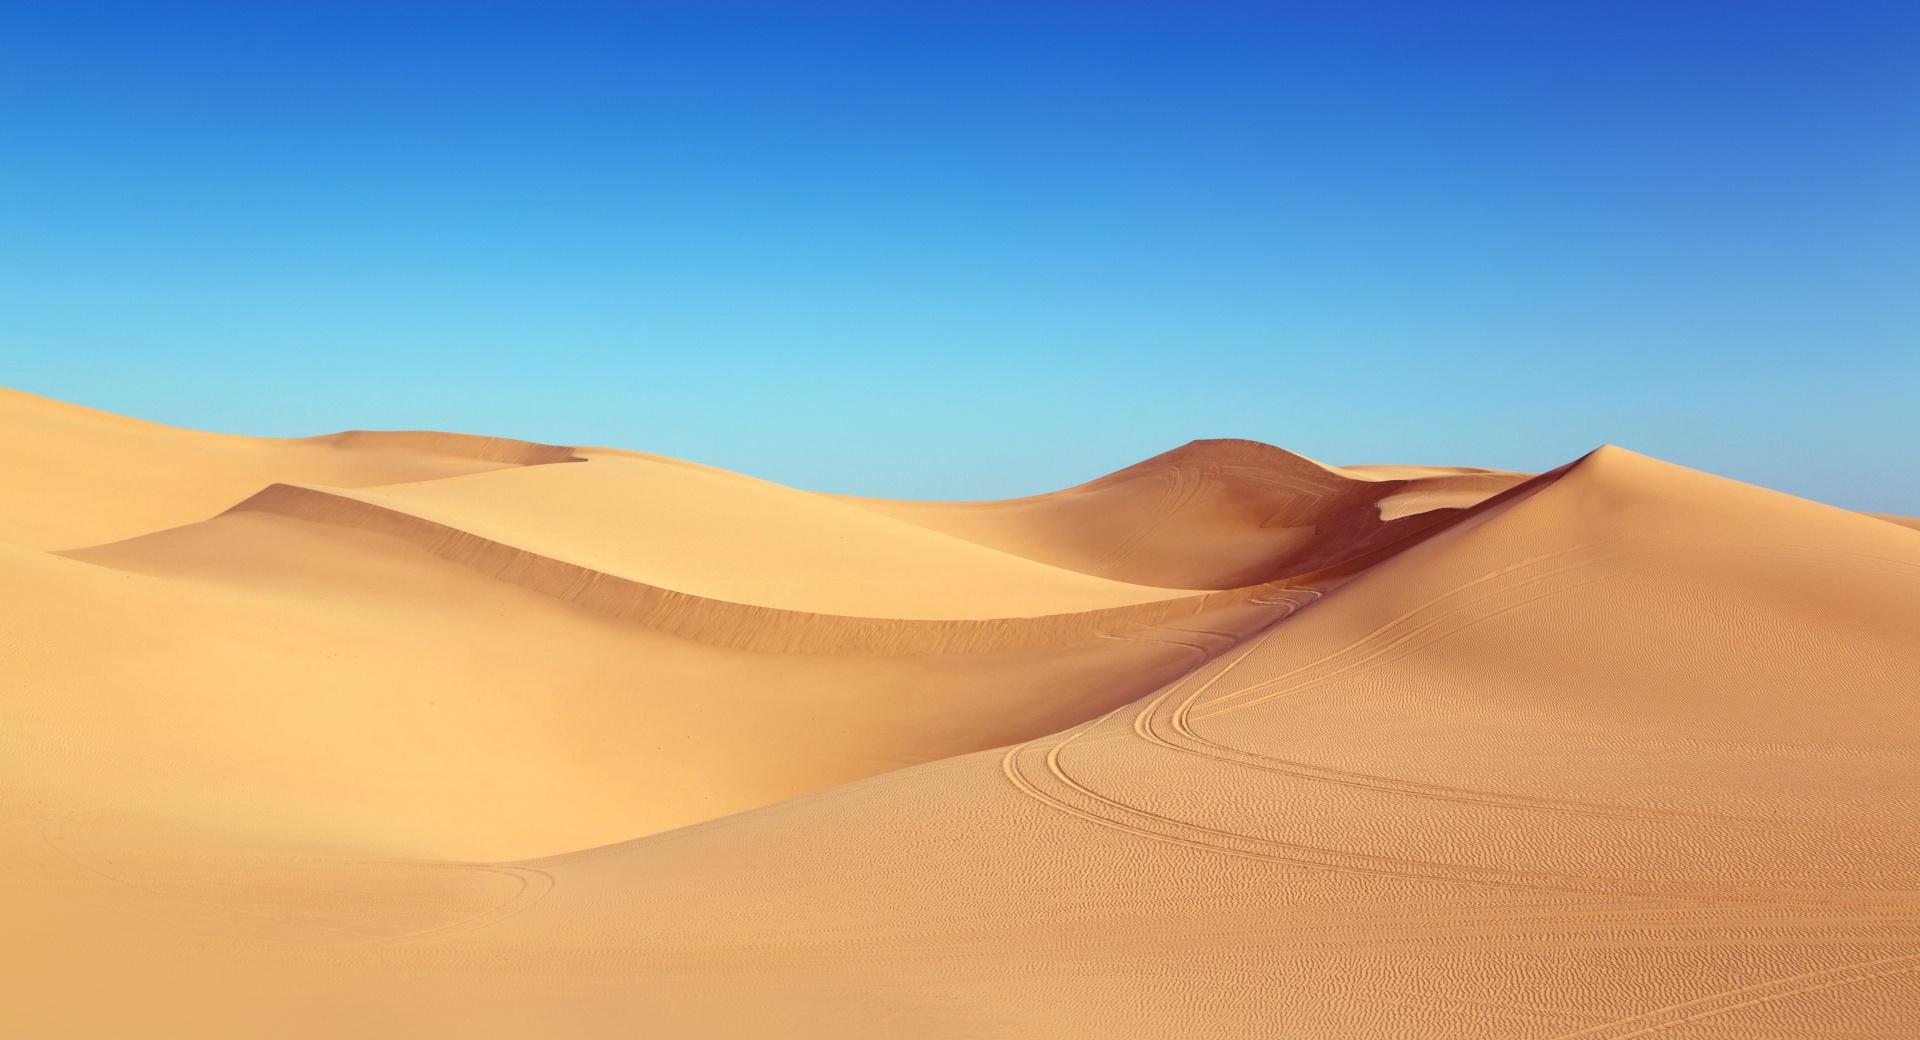 Algodones Dunes, California at 1024 x 1024 iPad size wallpapers HD quality